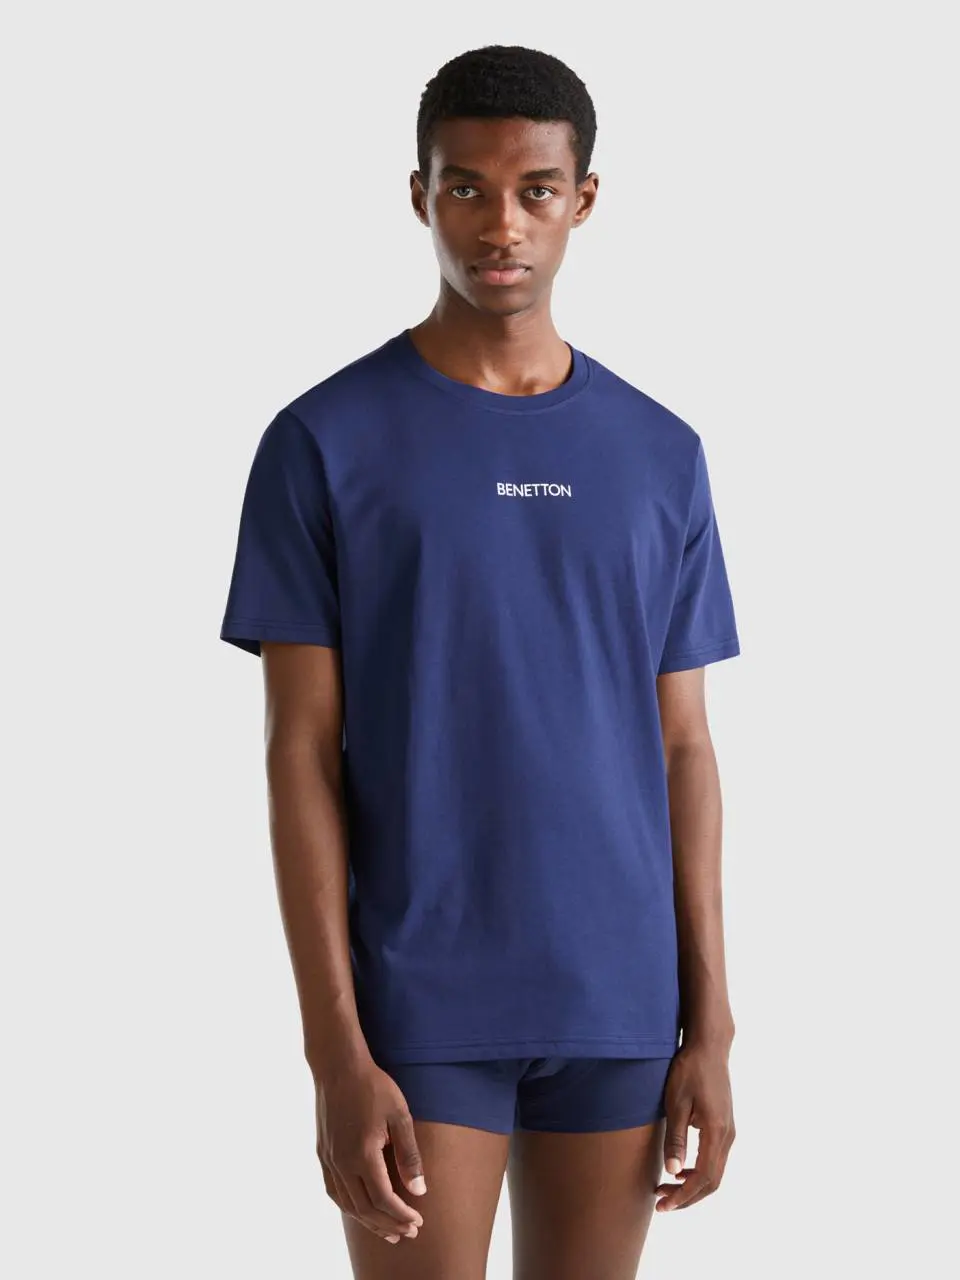 Benetton t-shirt with logo print. 1